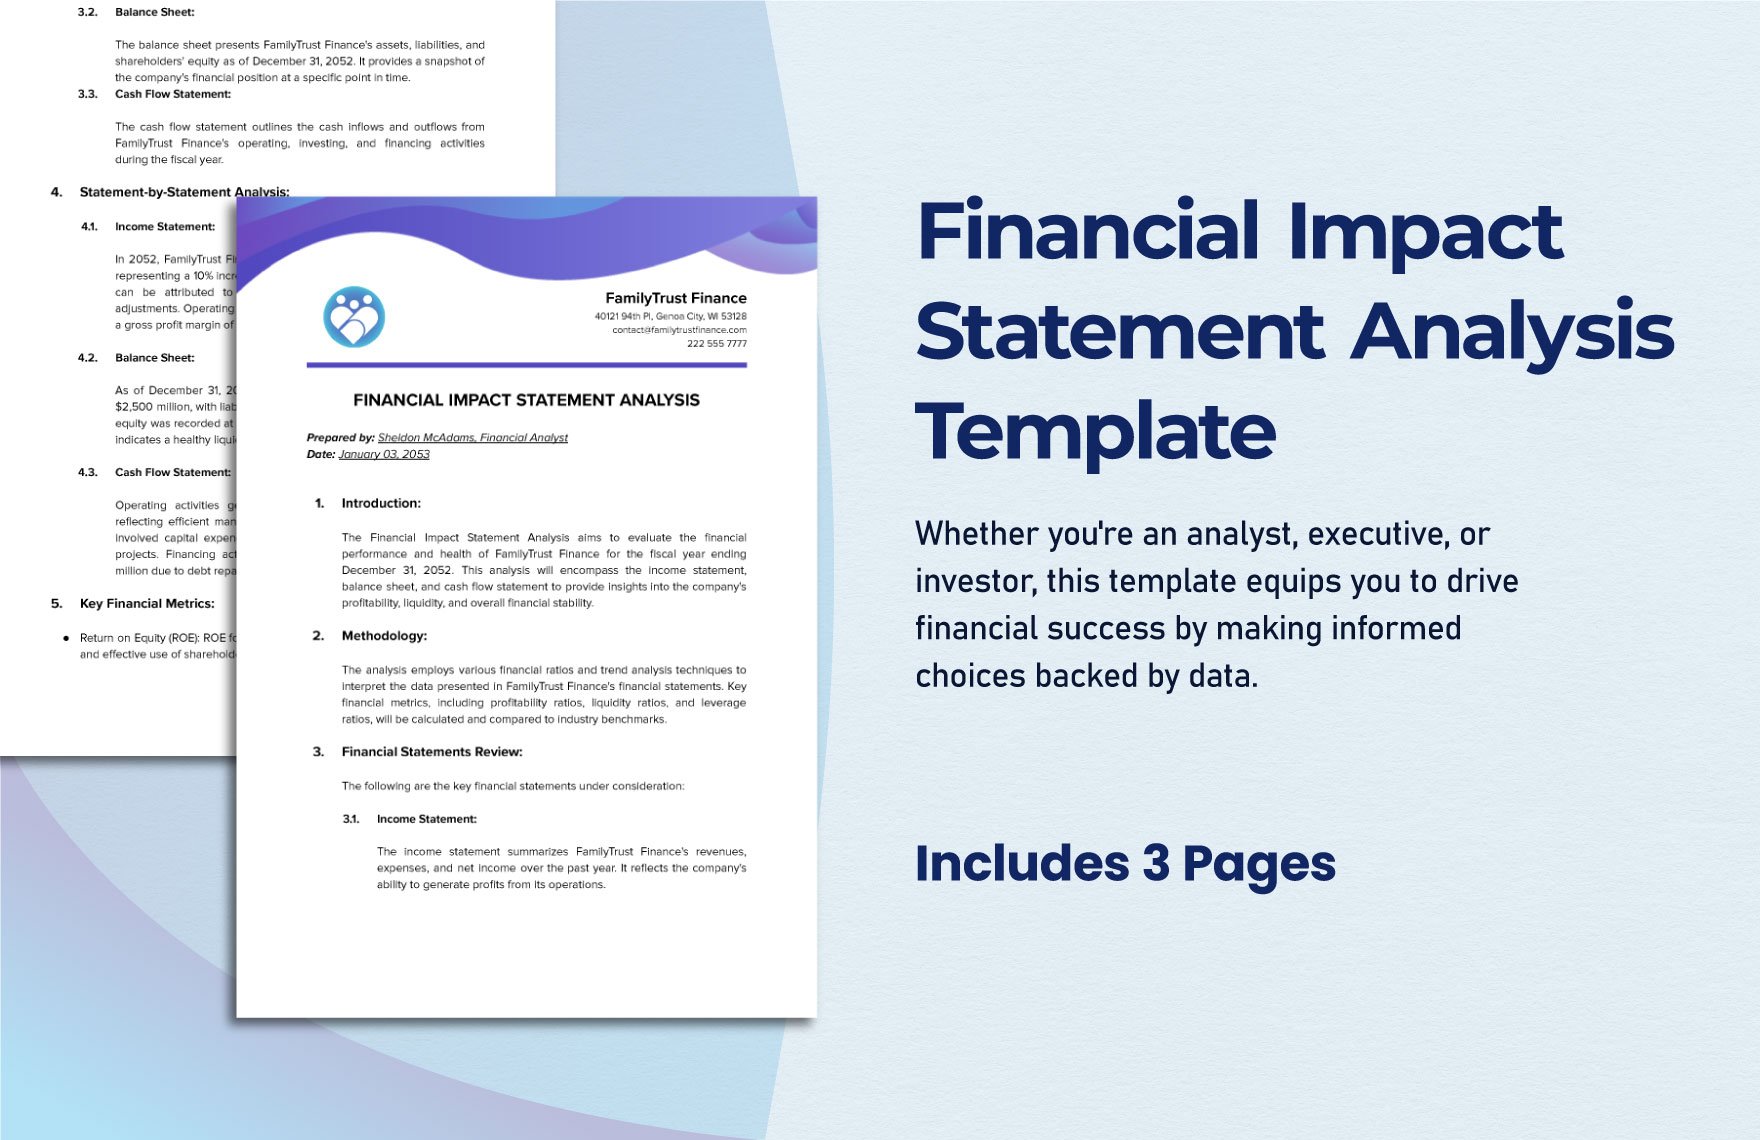 Financial Impact Statement Analysis Template